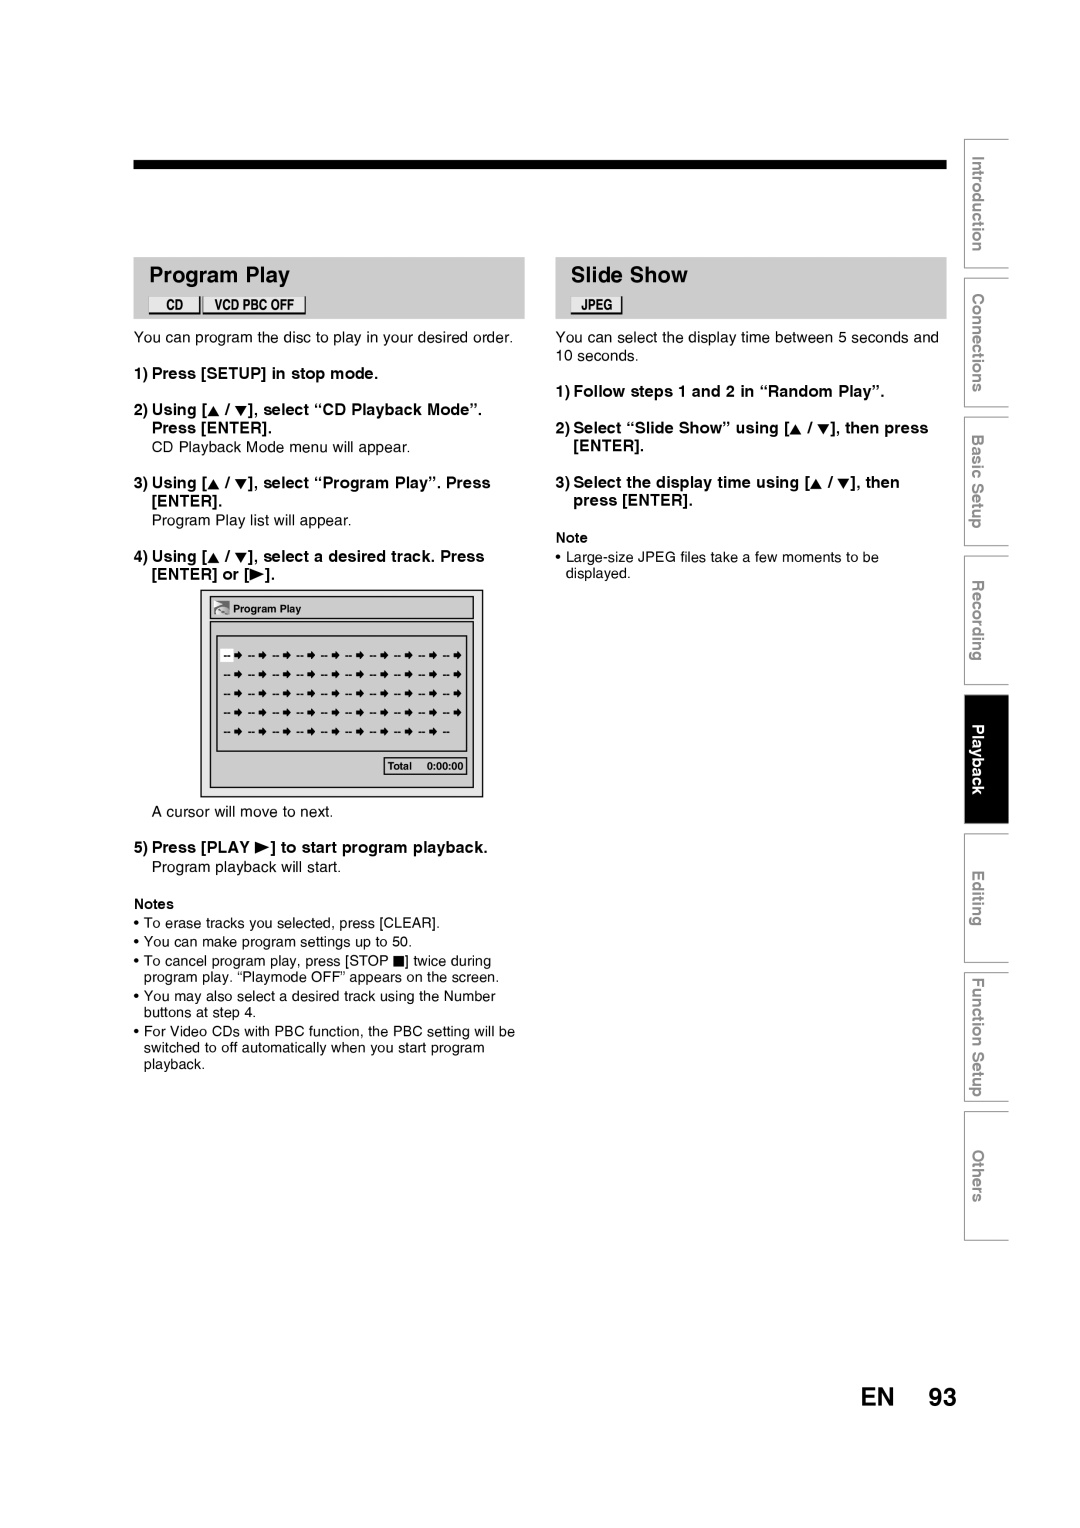 Toshiba D-RW2SU/D-RW2SC manual Slide Show, Using K / L, select “Program Play”. Press ENTER, ENTER or B 